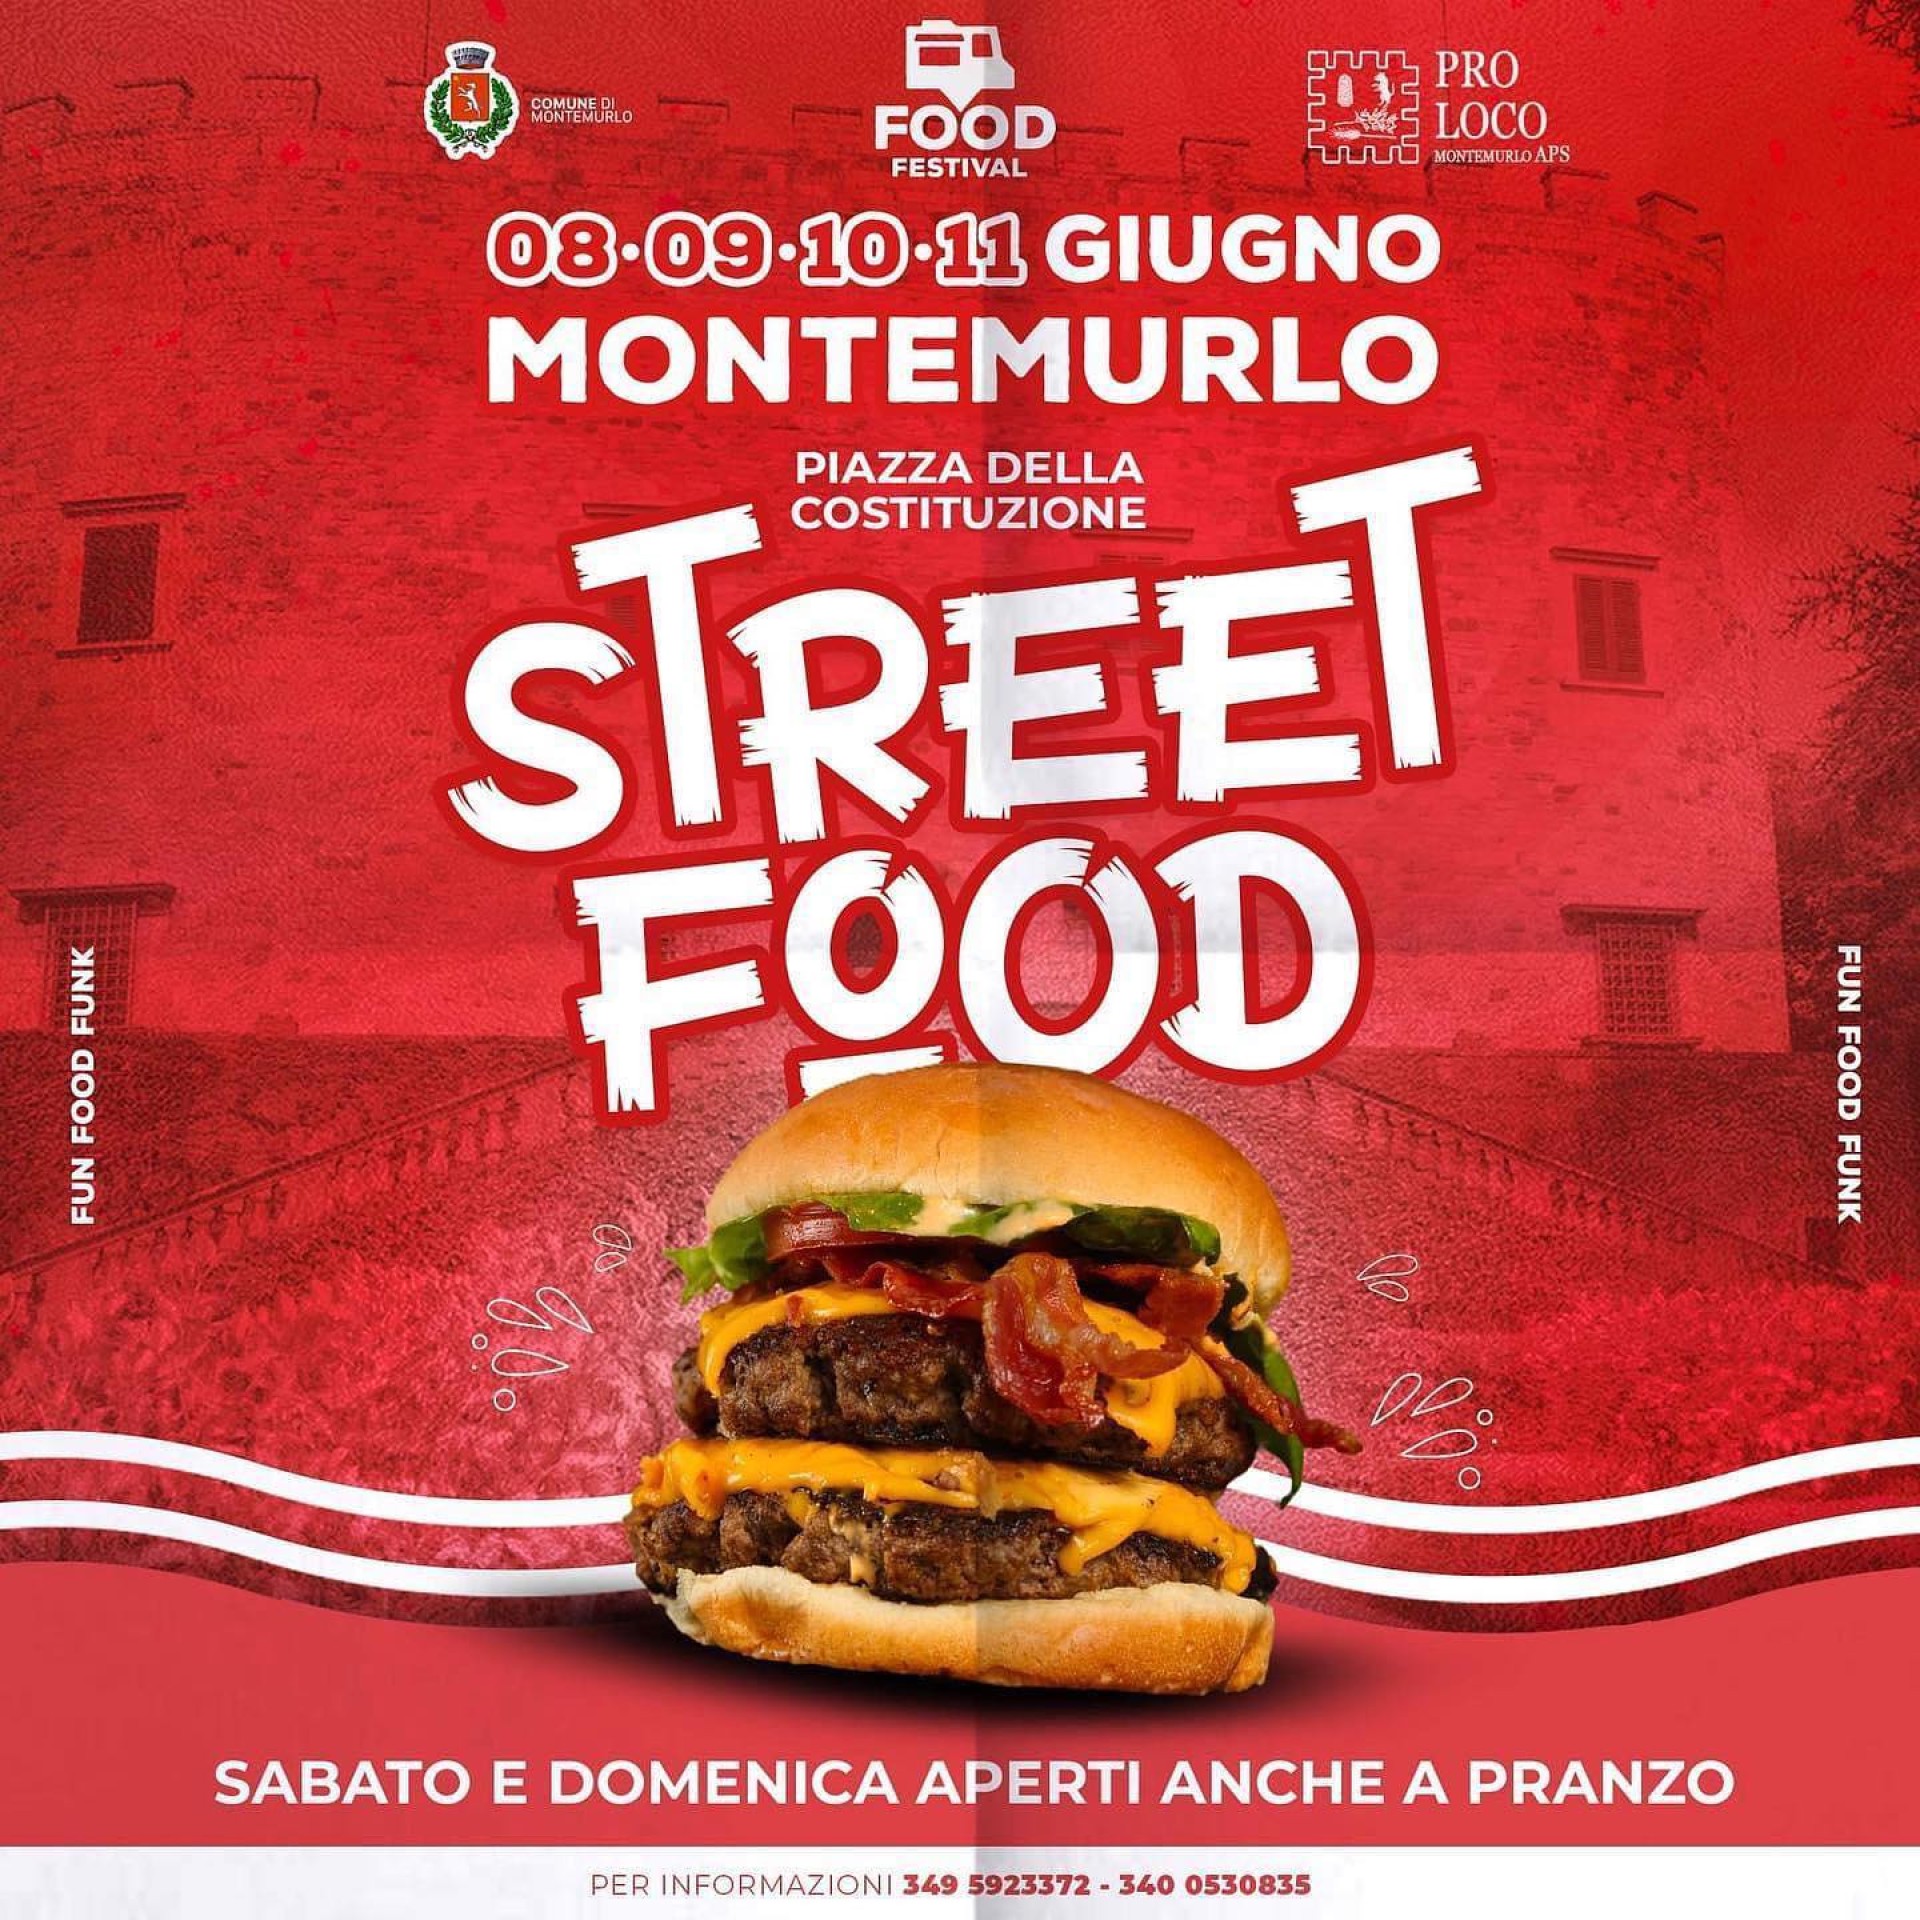 MONTEMURLO STREET FOOD FESTIVAL